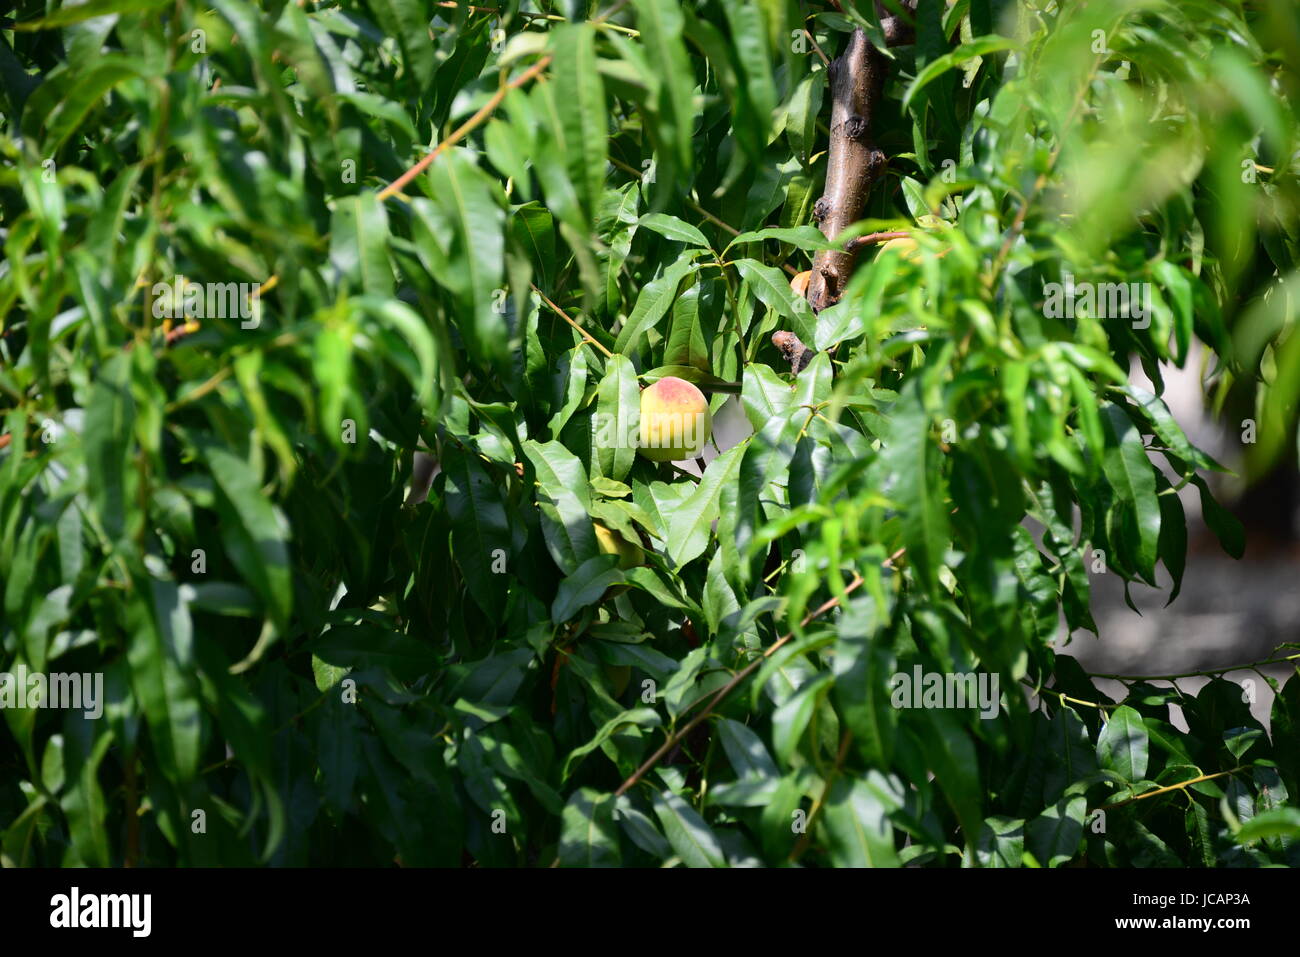 plum on tree in spain Stock Photo